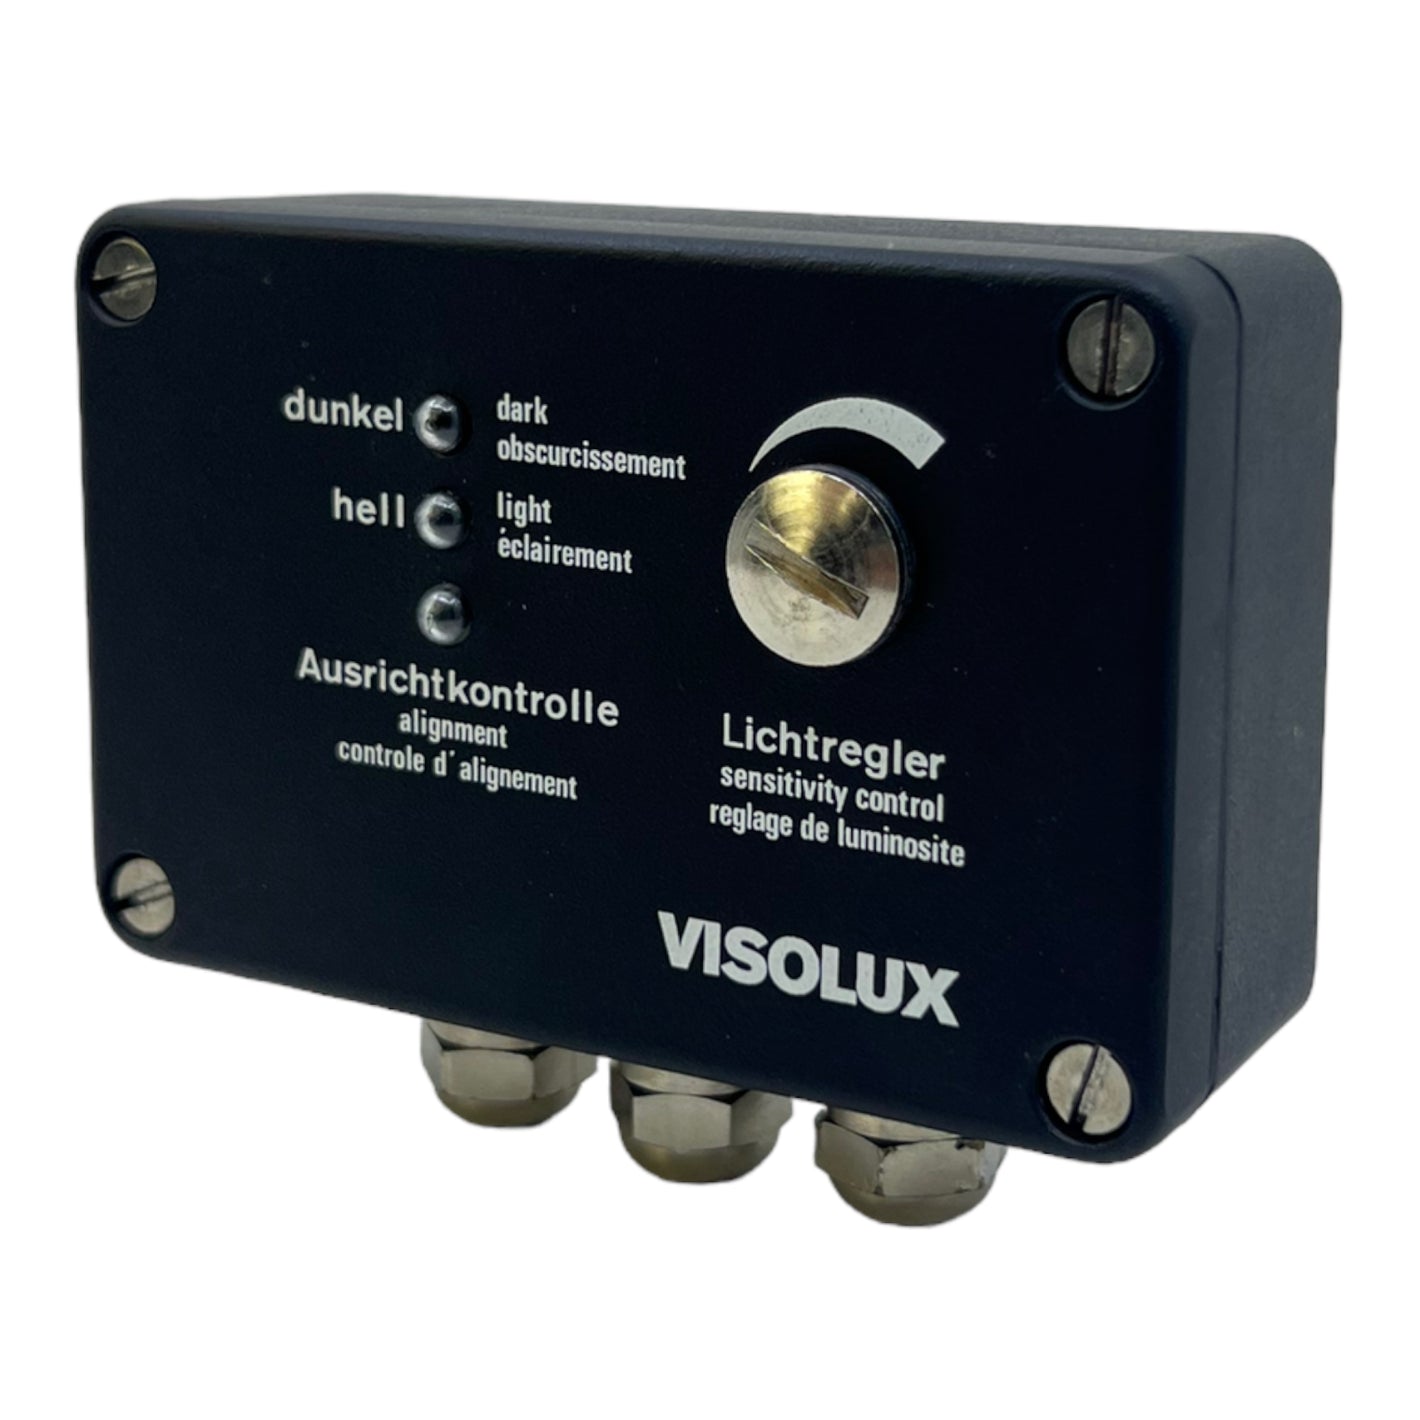 Visolux ST2 light controller 10...30 V alignment control